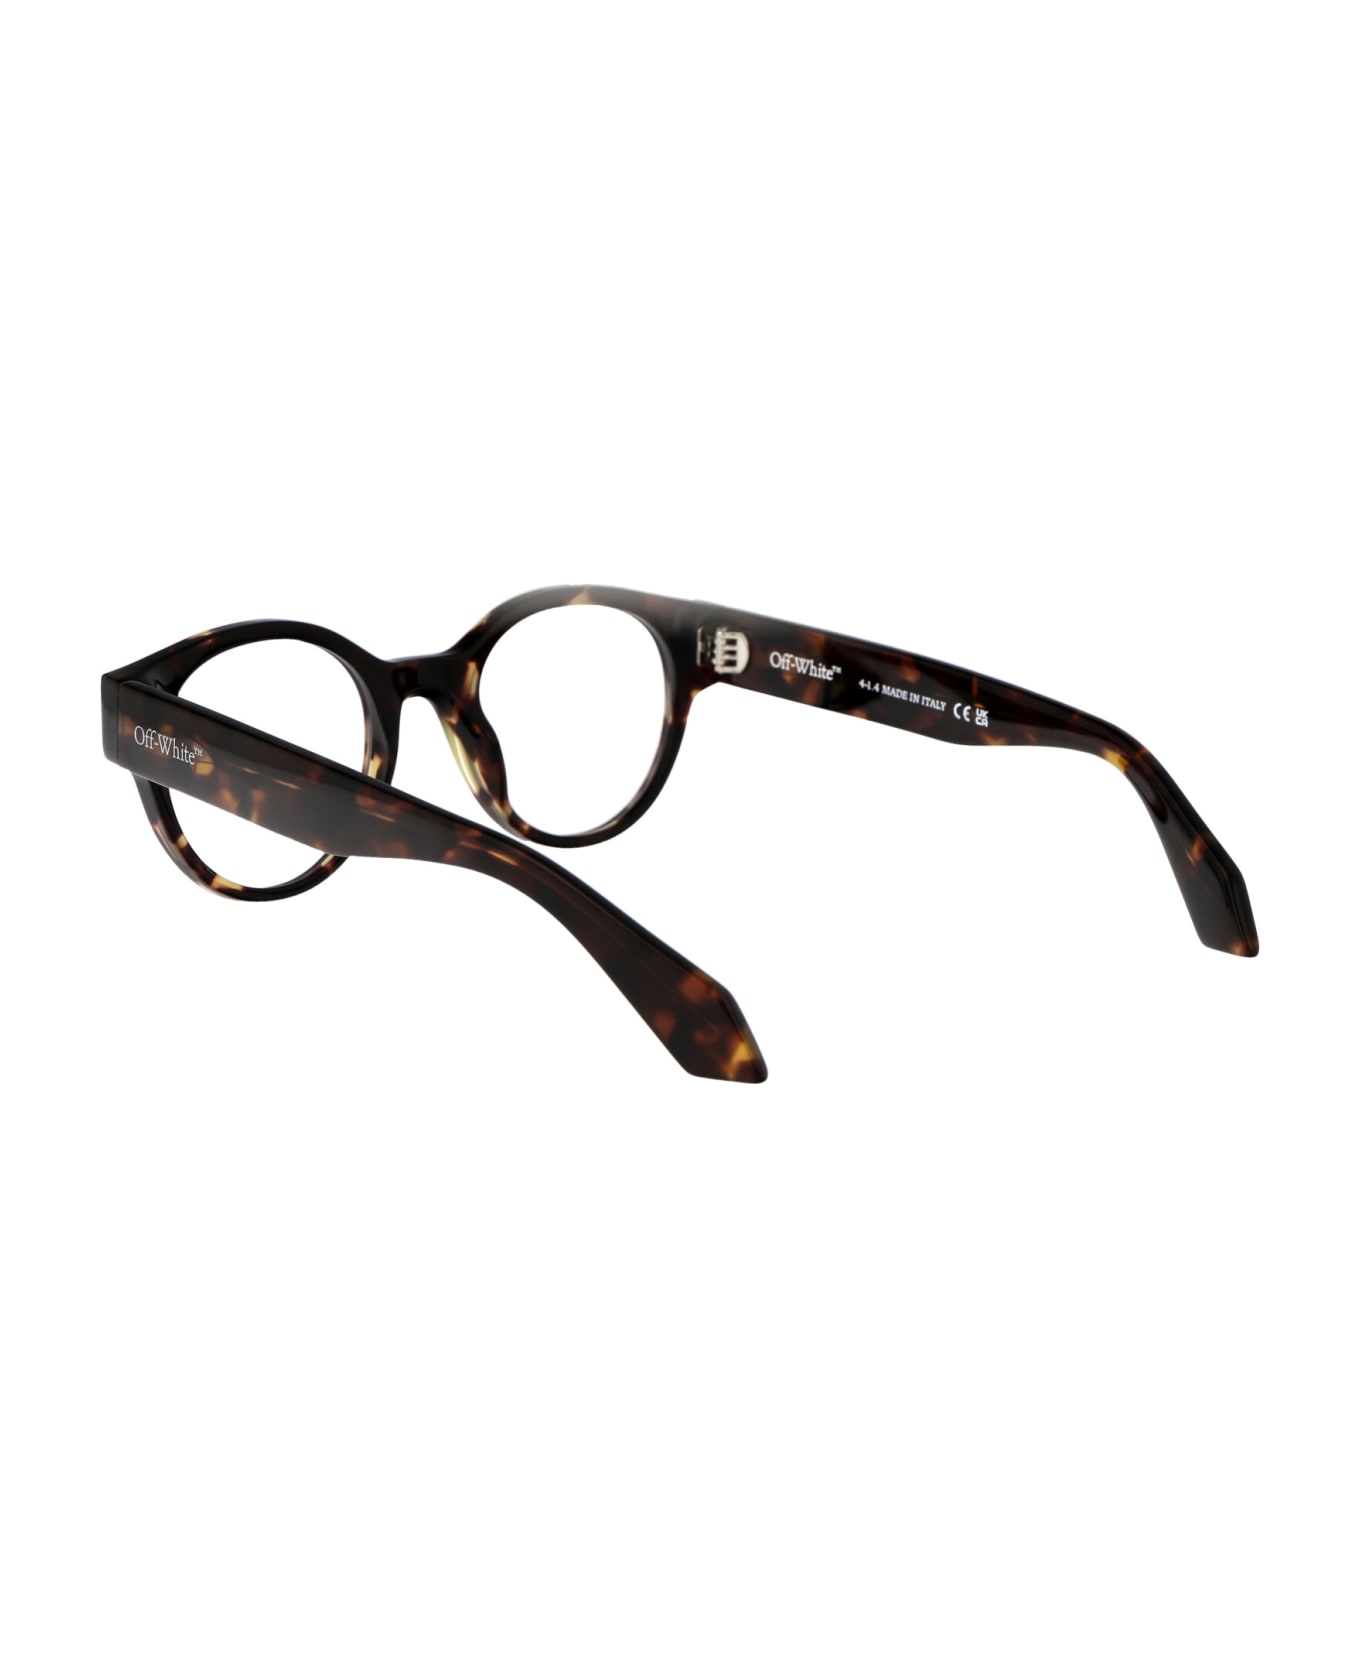 Off-White Optical Style 55 Glasses - 6000 HAVANA アイウェア